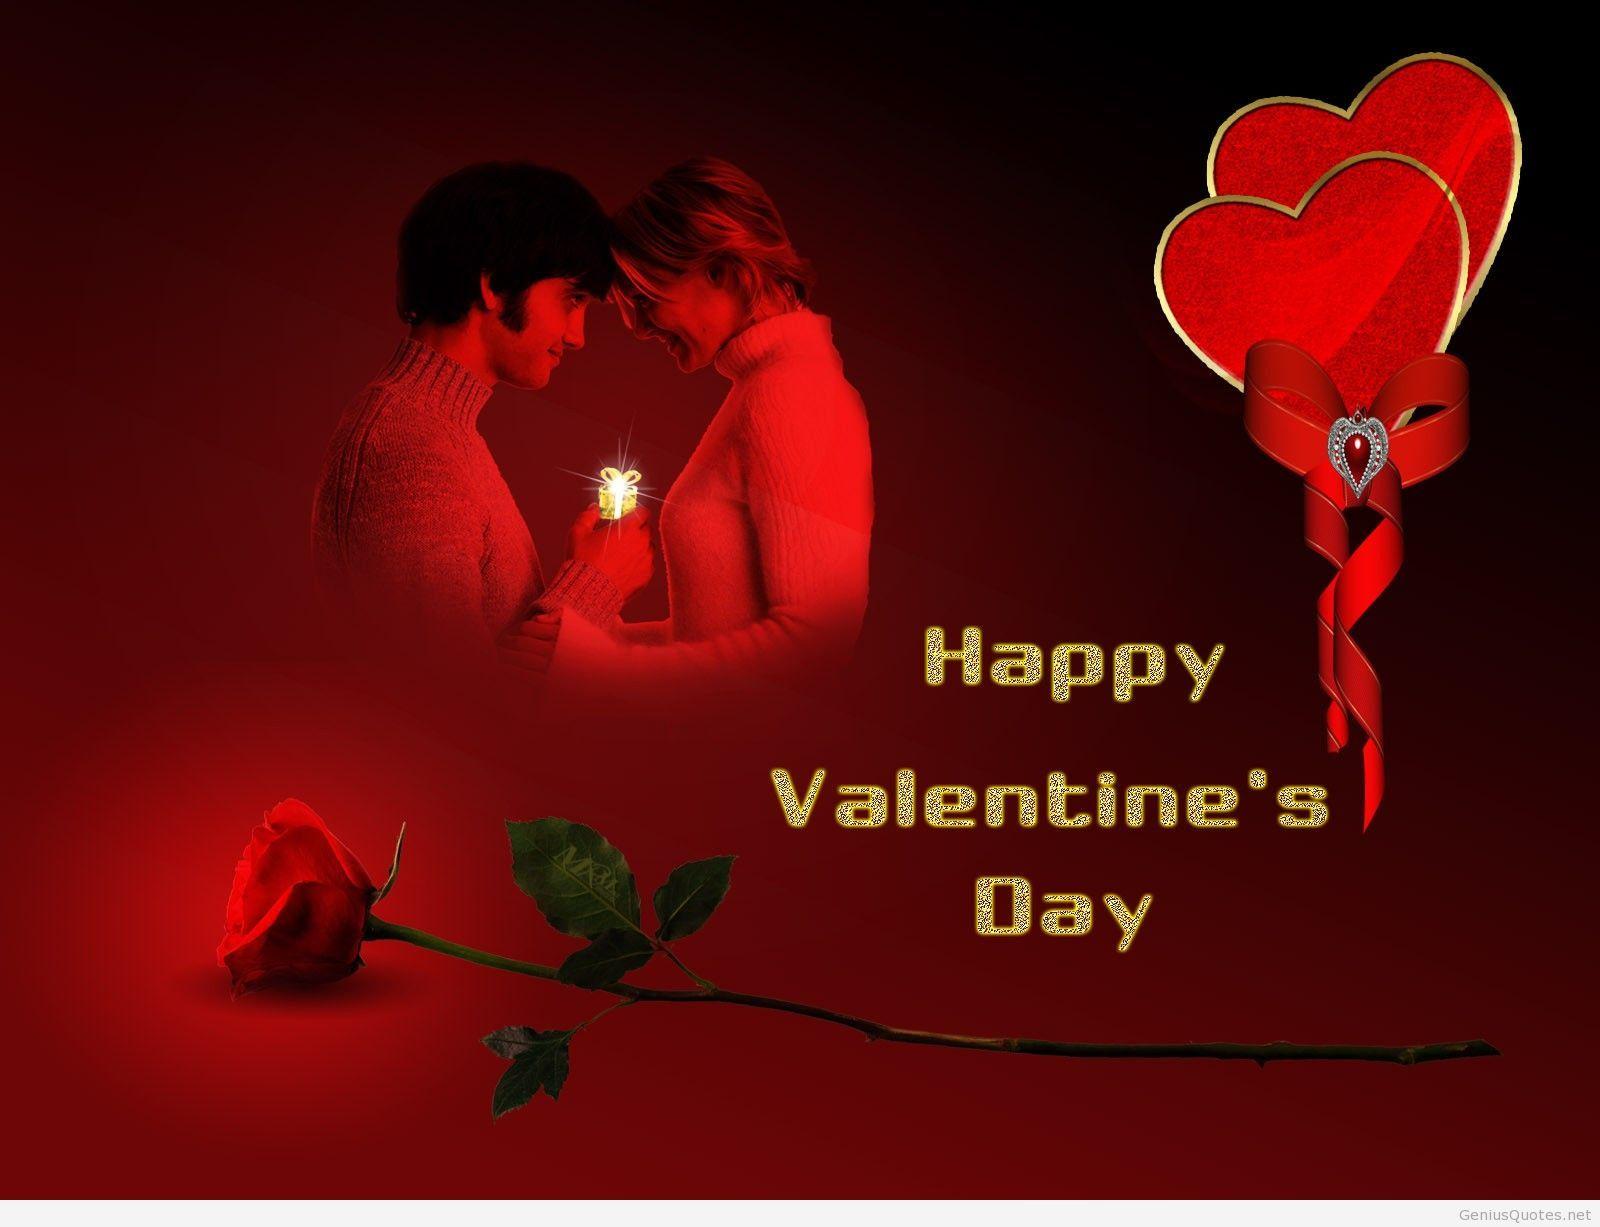 Happy Valentine Day Special Couple Image. Happy valentines day